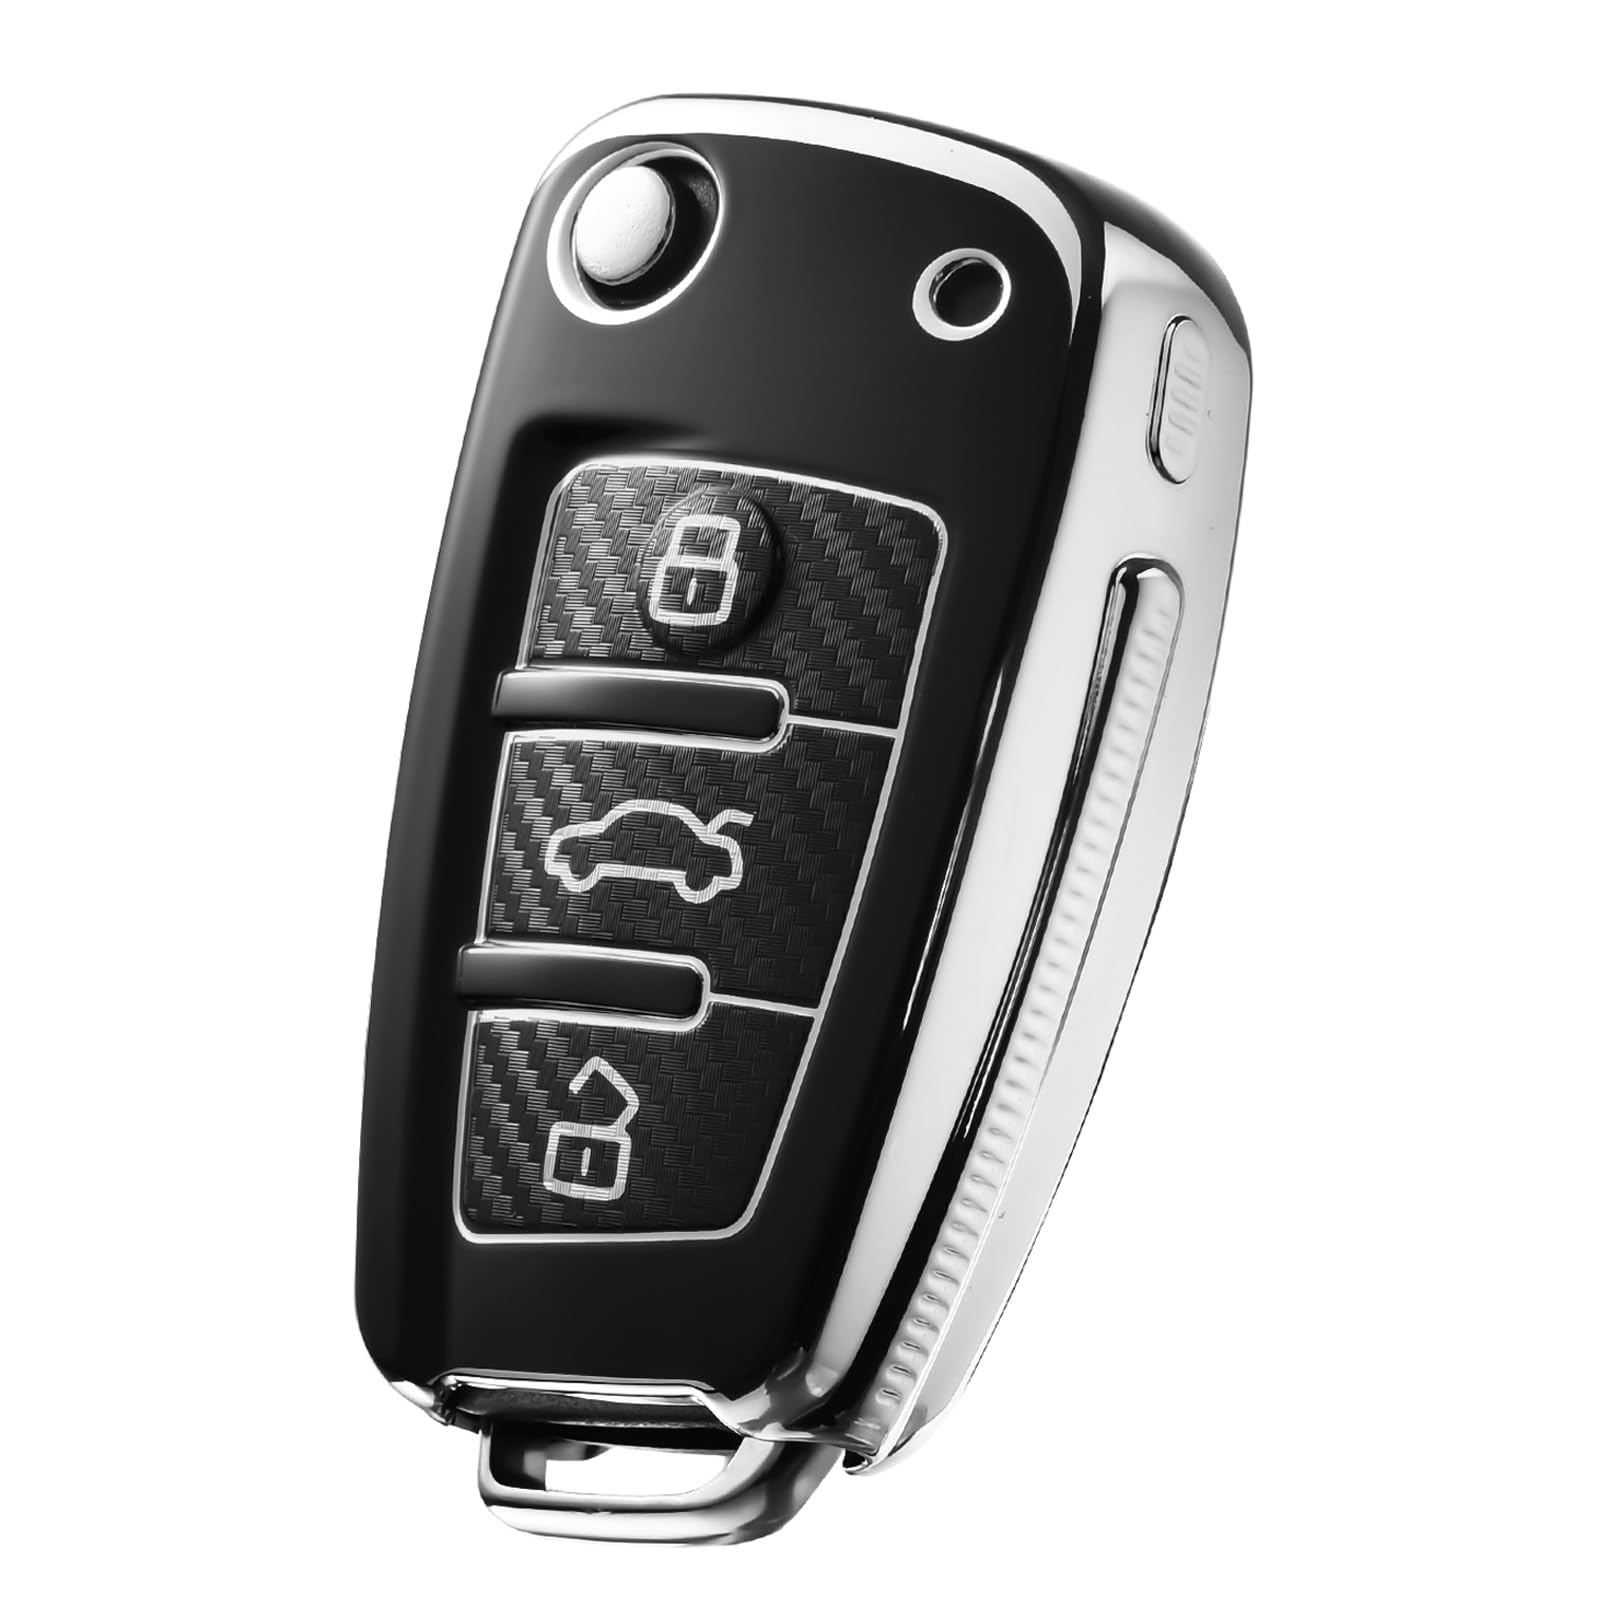 OATSBASF Schlüsselhülle Geeignet für Audi, Autoschlüssel Hülle für A1 A3 A4 A6 Q3 Q5 Q7 S3 R8 TT Silicone TPU Schutzhülle (C-Schwarz) von OATSBASF